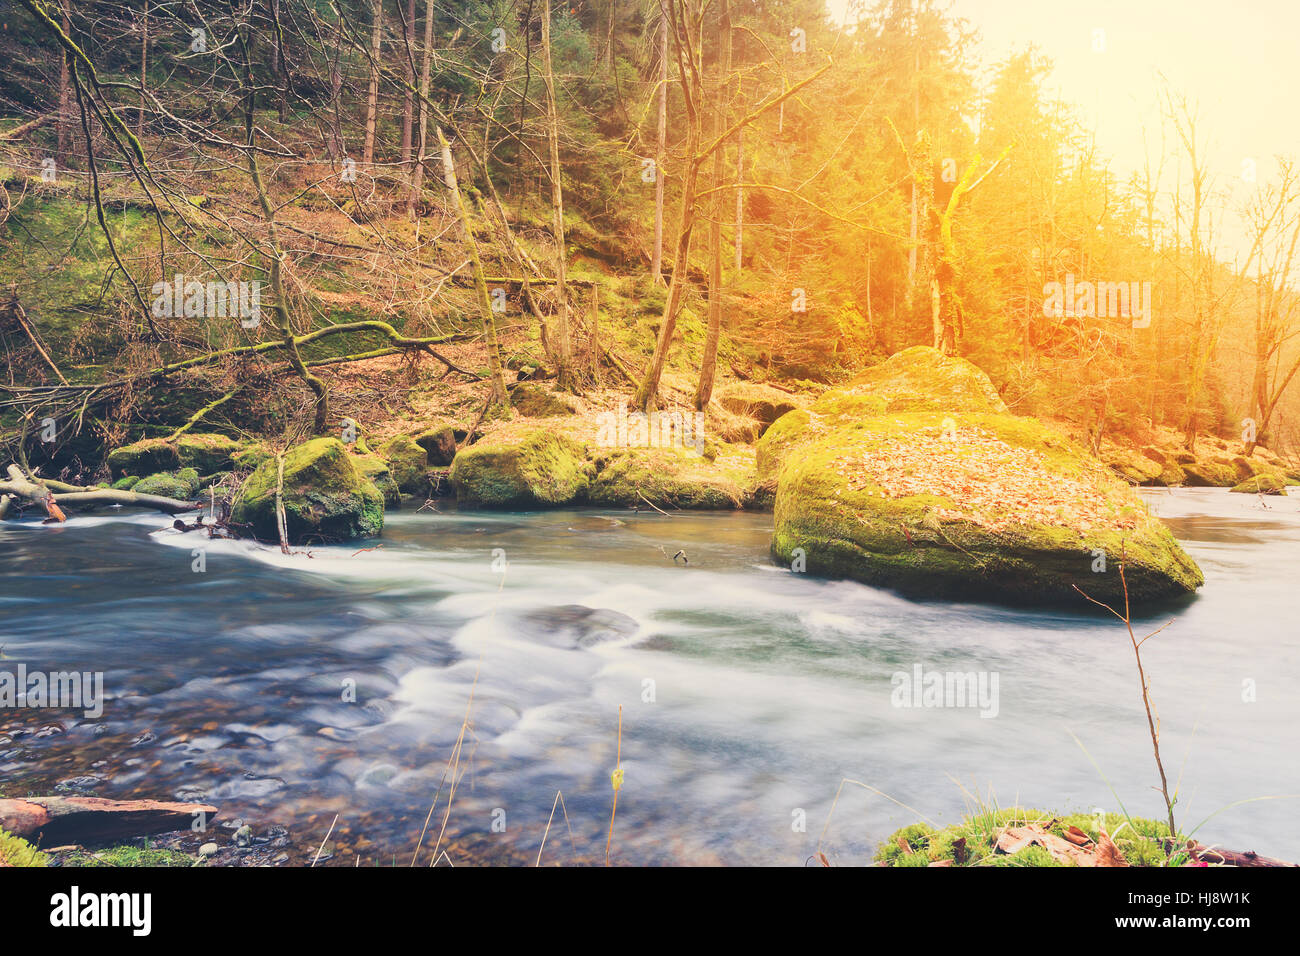 River paysage de forêt en automne, vintage filtre et des reflets. Banque D'Images